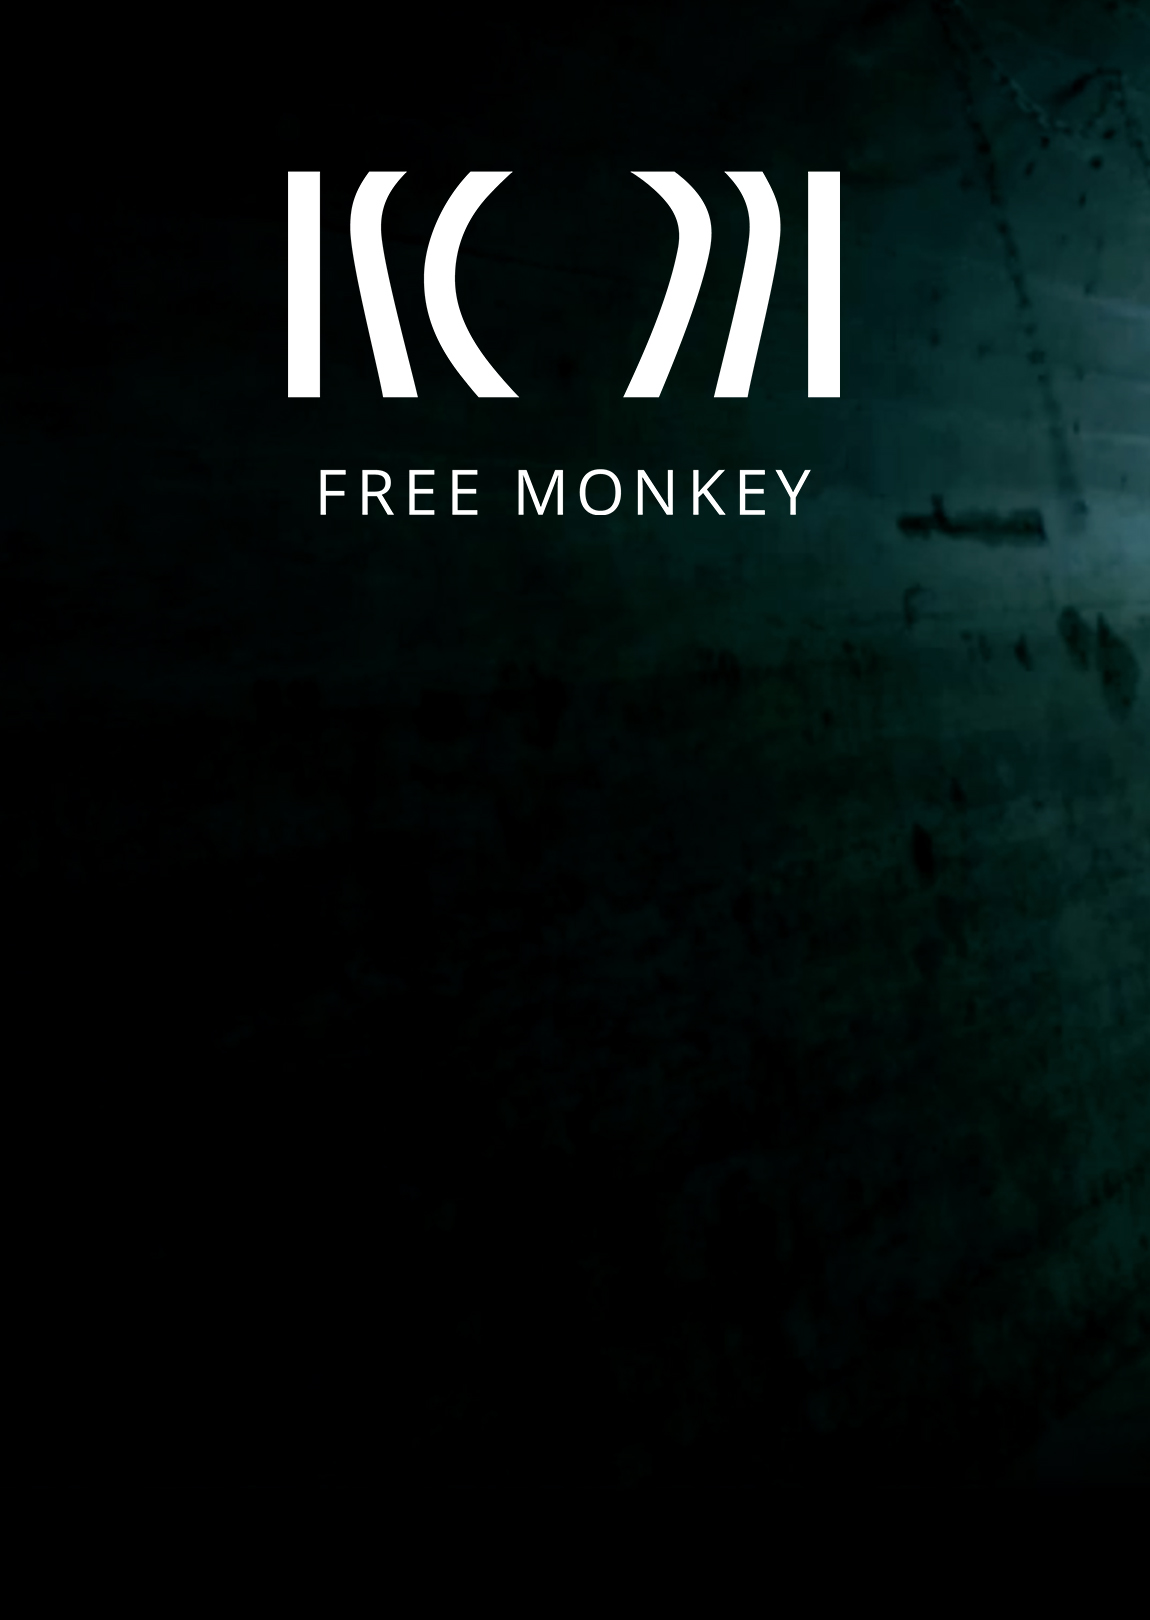 Free Monkey Logo